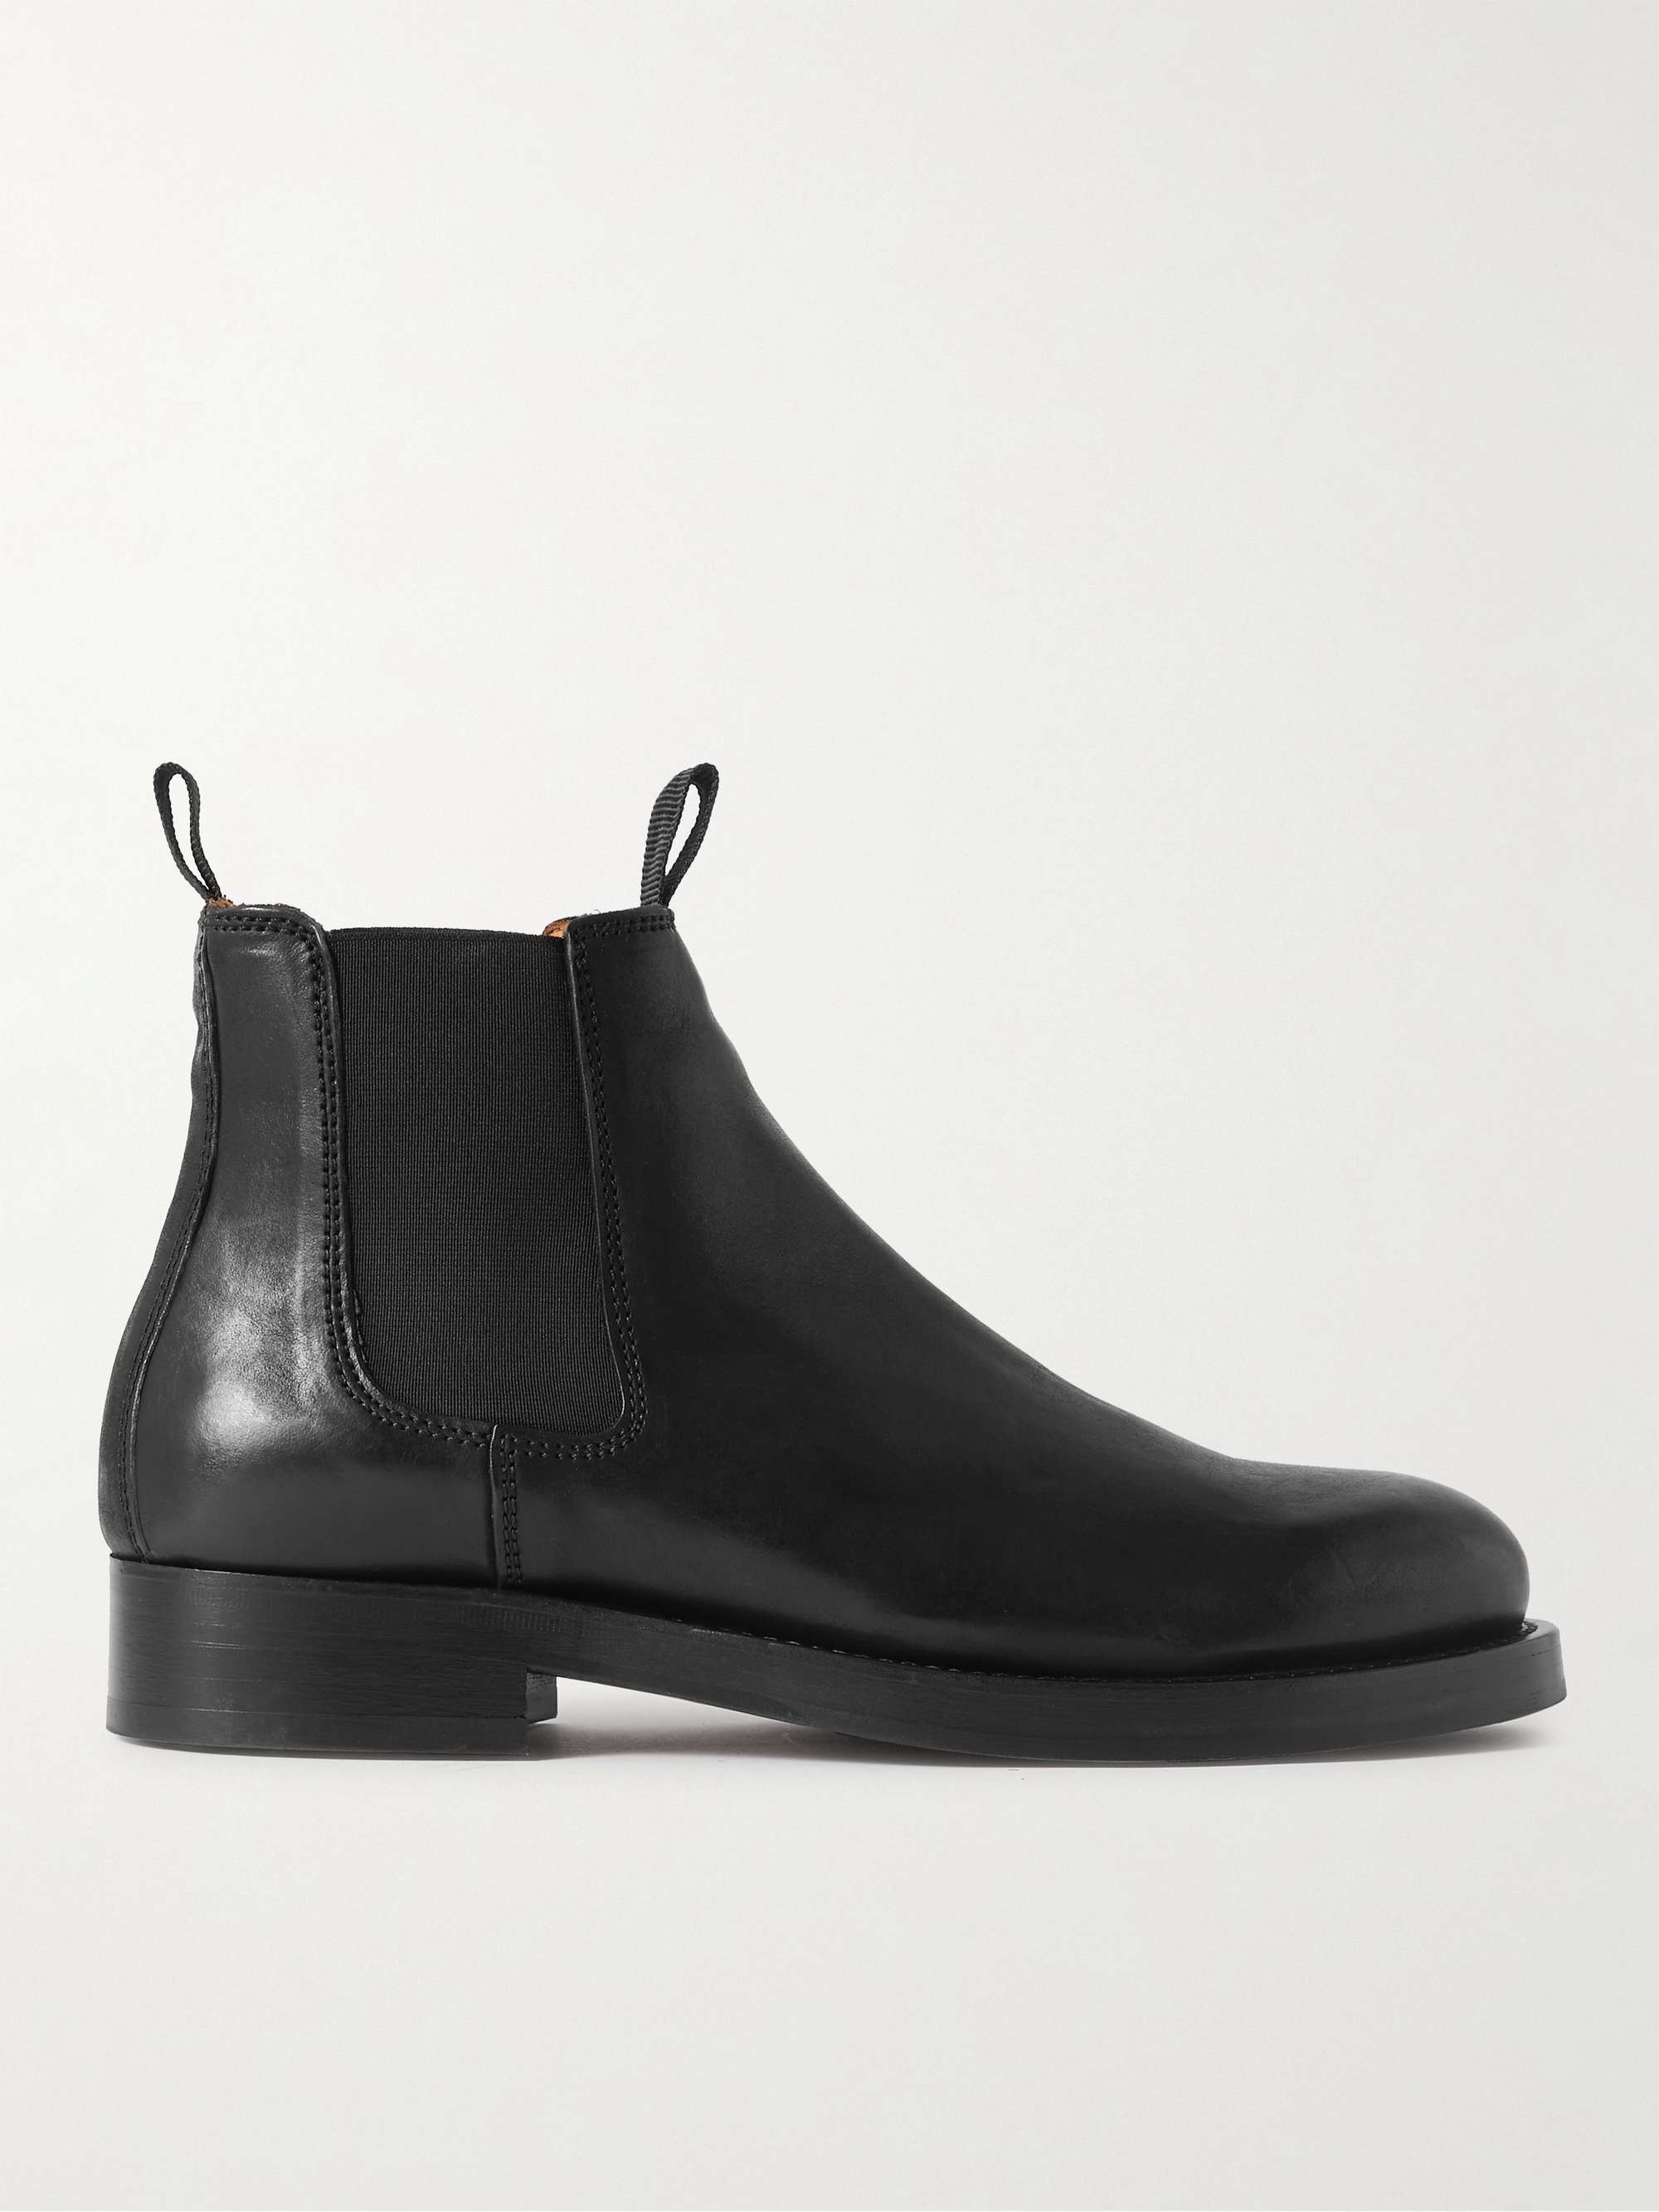 BELSTAFF Longton Leather Chelsea Boots | MR PORTER